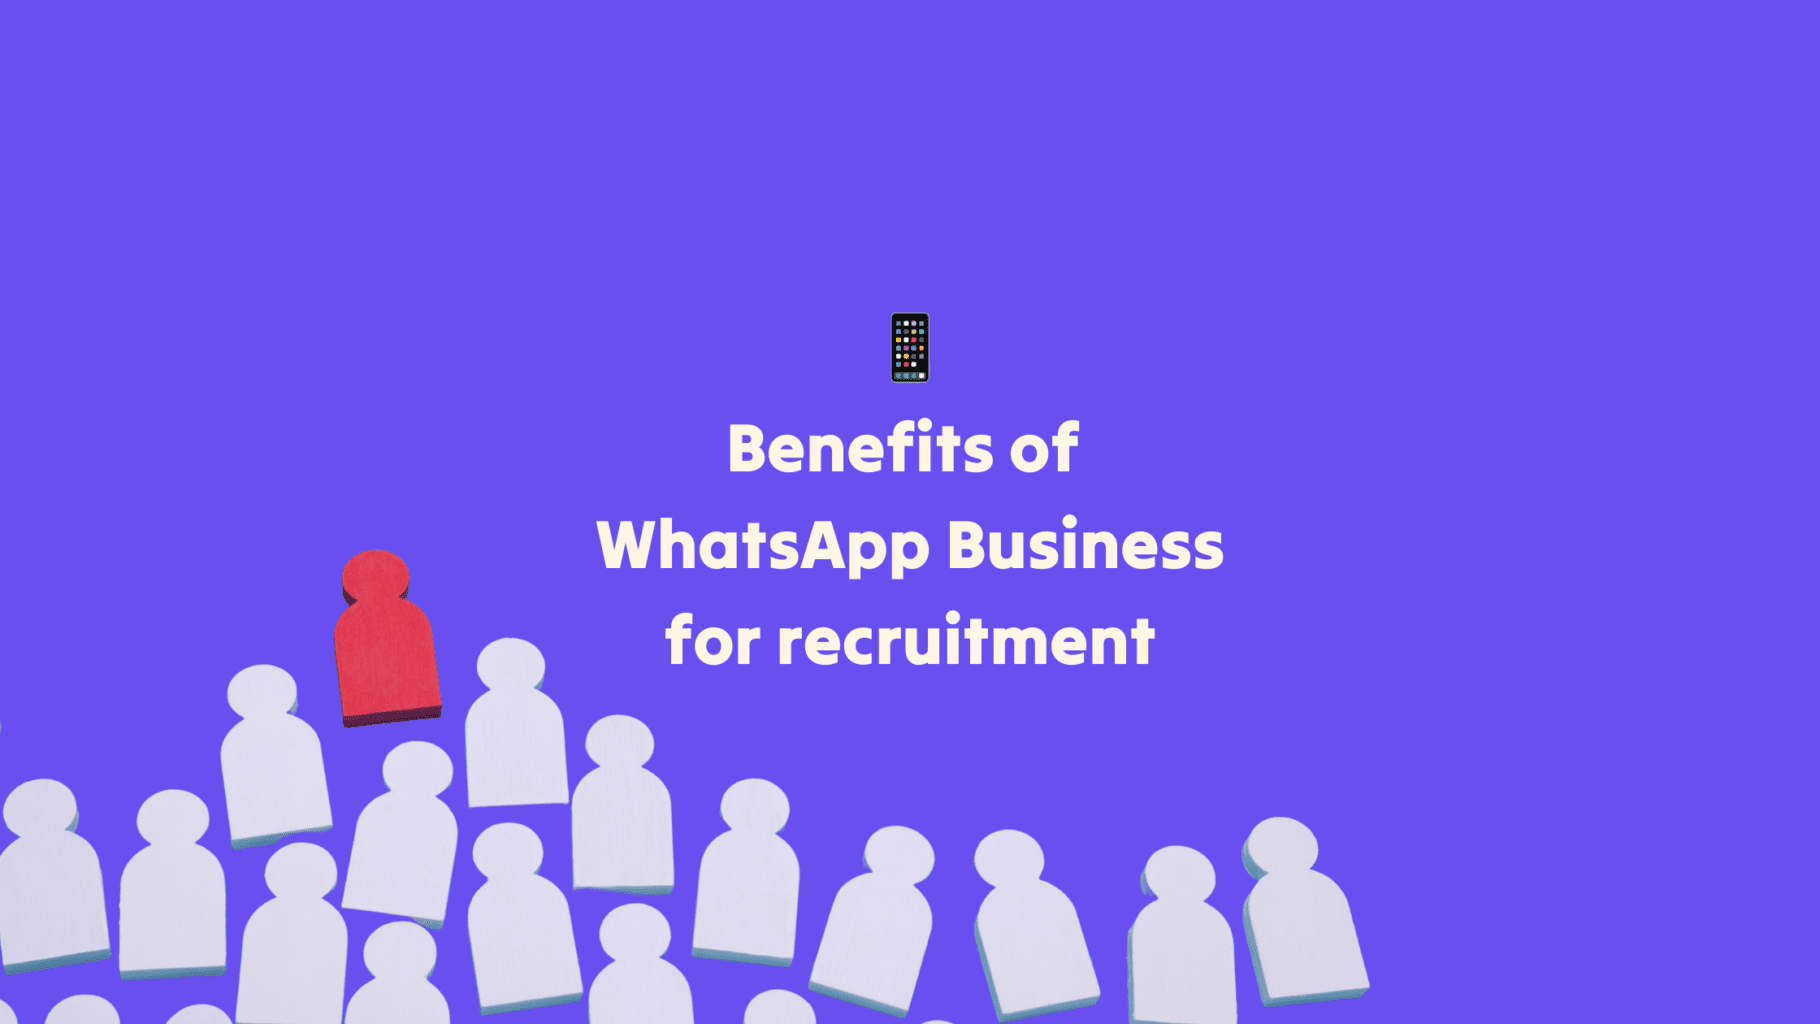 Benefits of Using WhatsApp Business in Recruitment